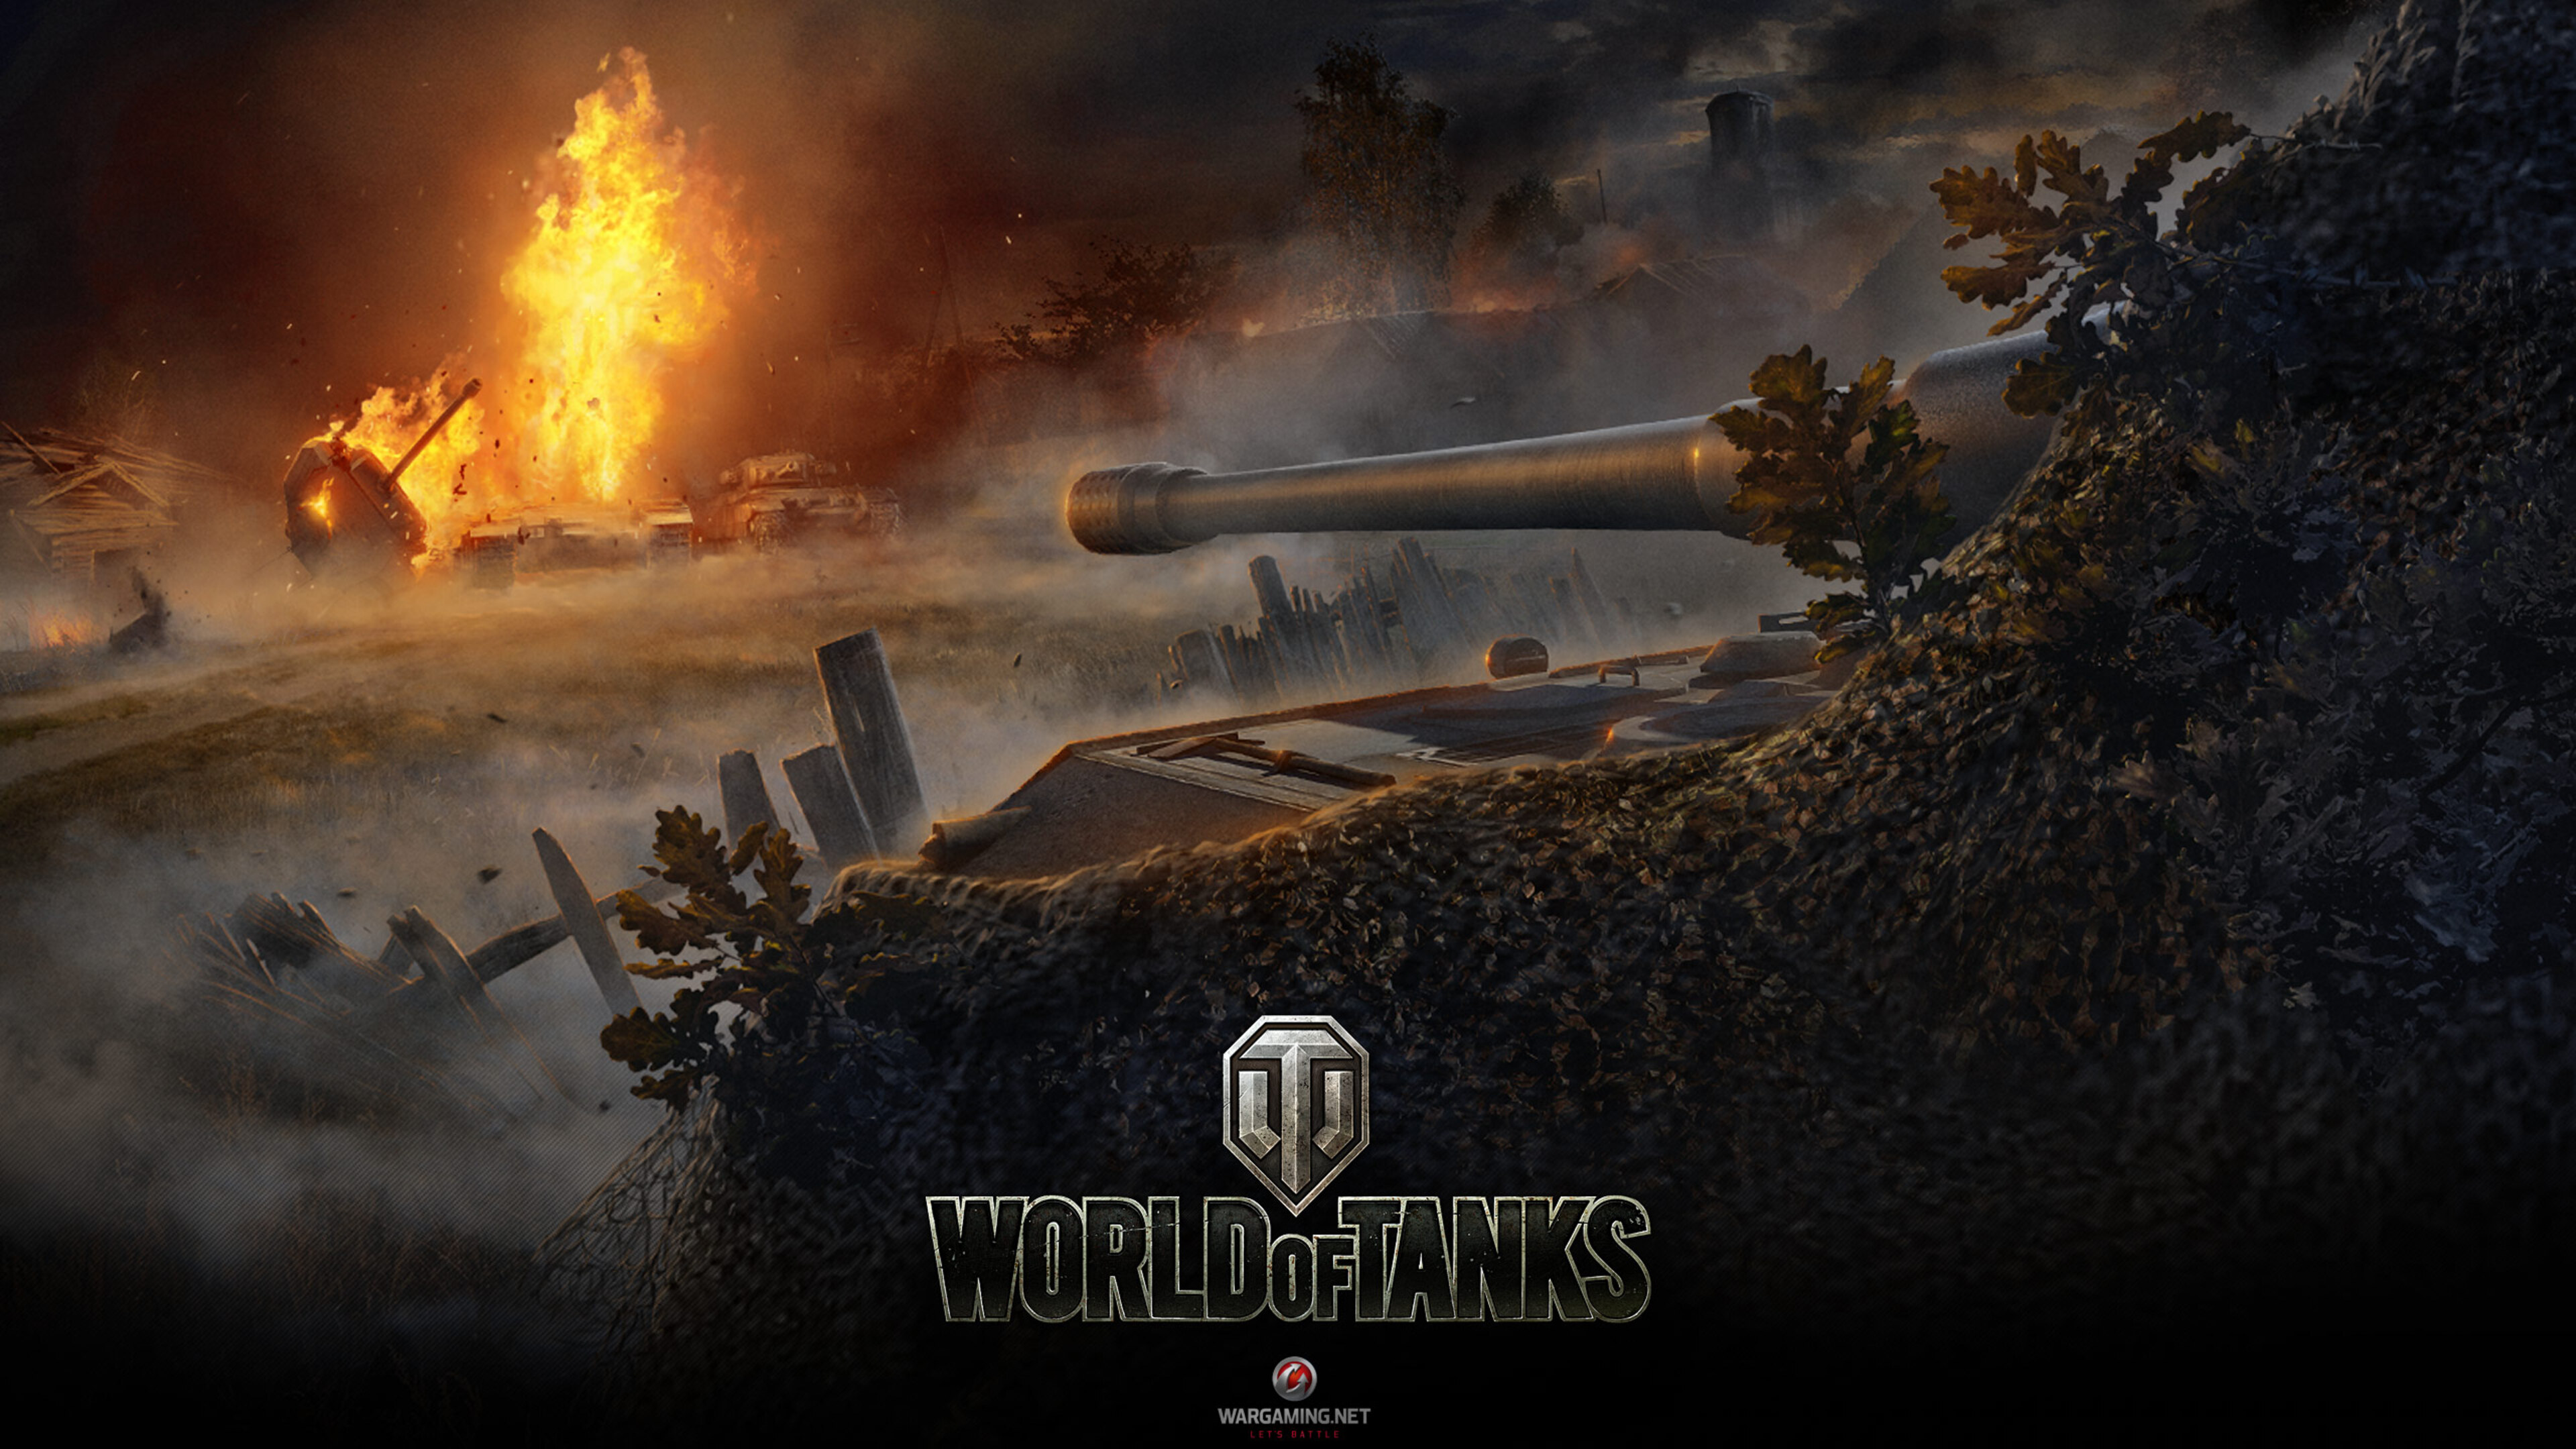 Https worldoftanks. Танк World of Tanks. Загрузочный экран ворлд оф танк. Постер ворлд оф танк.